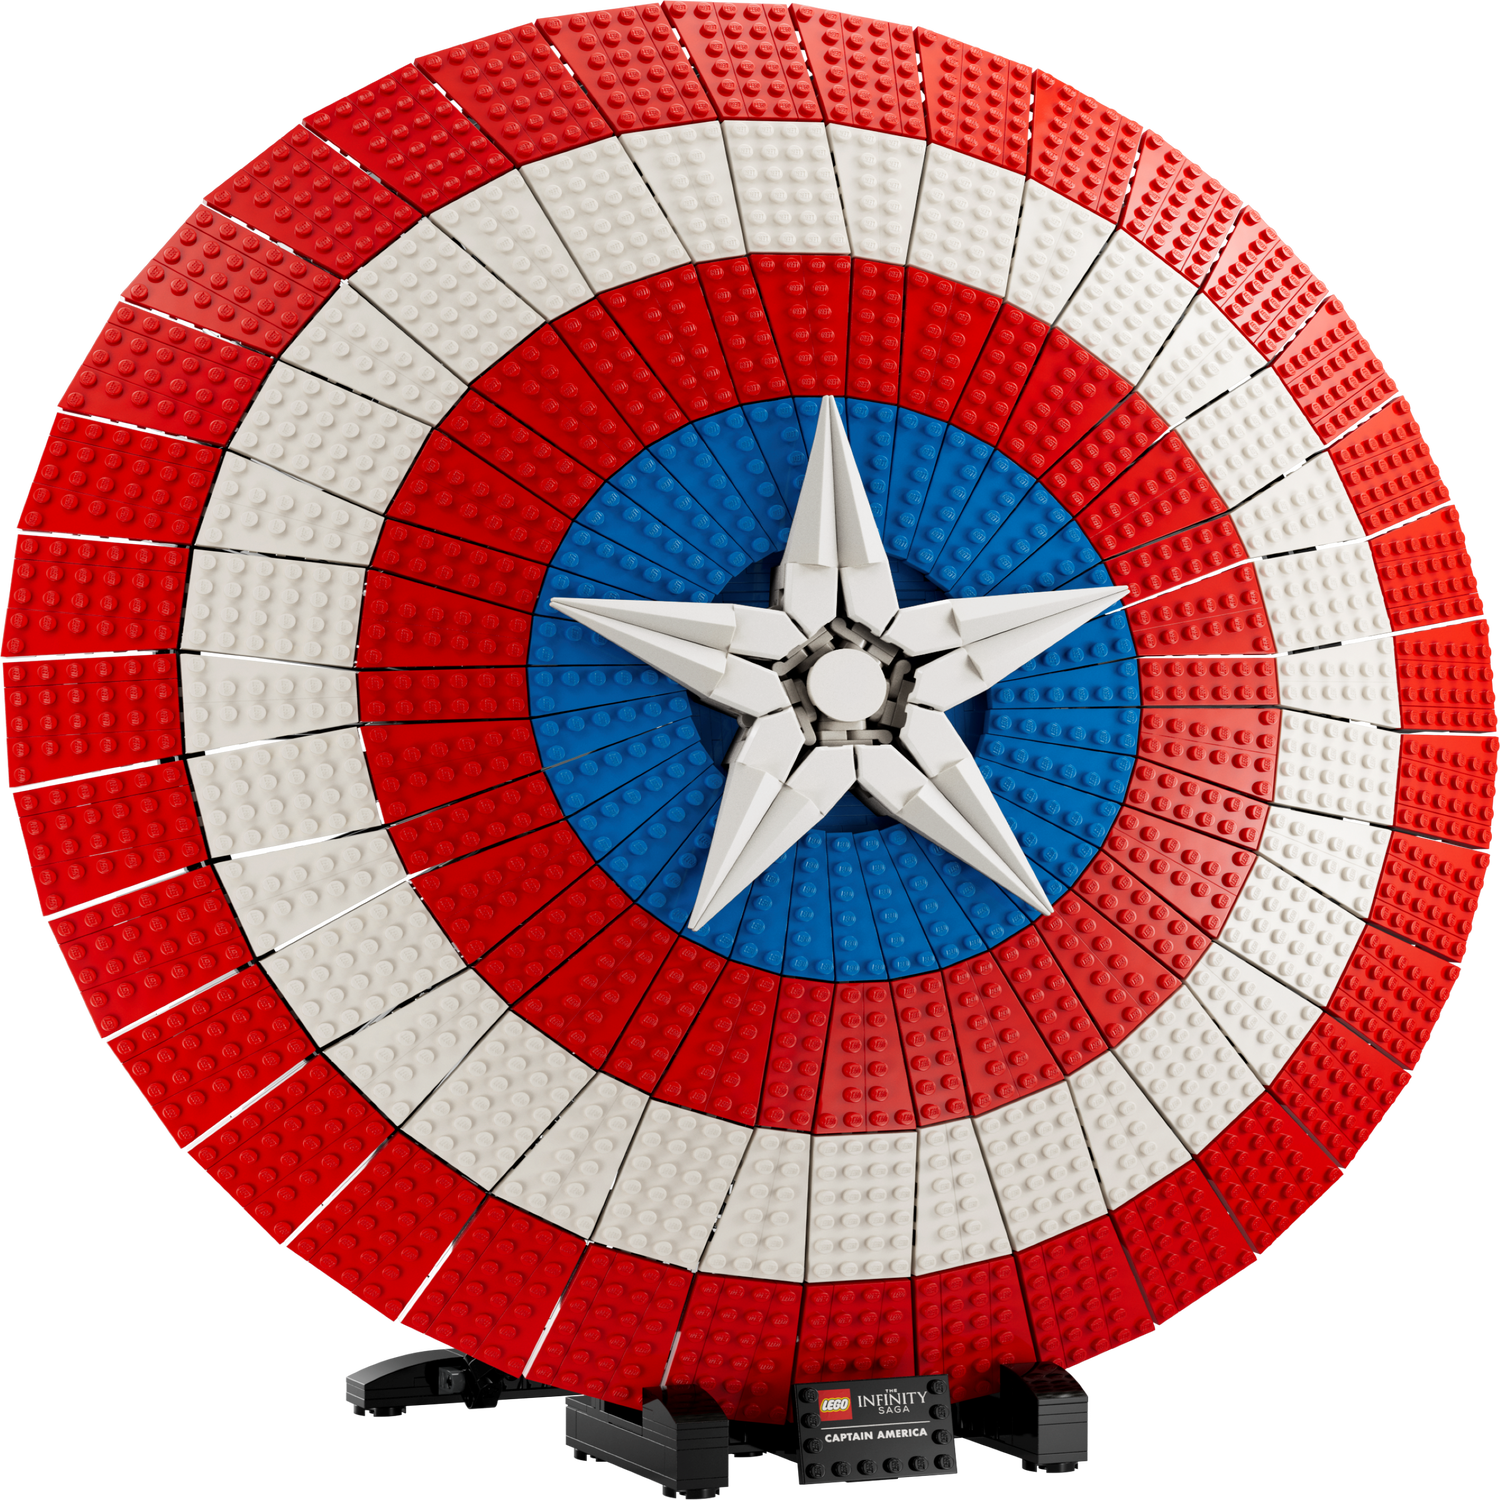 Marvel’s Captain America Duffle Bag